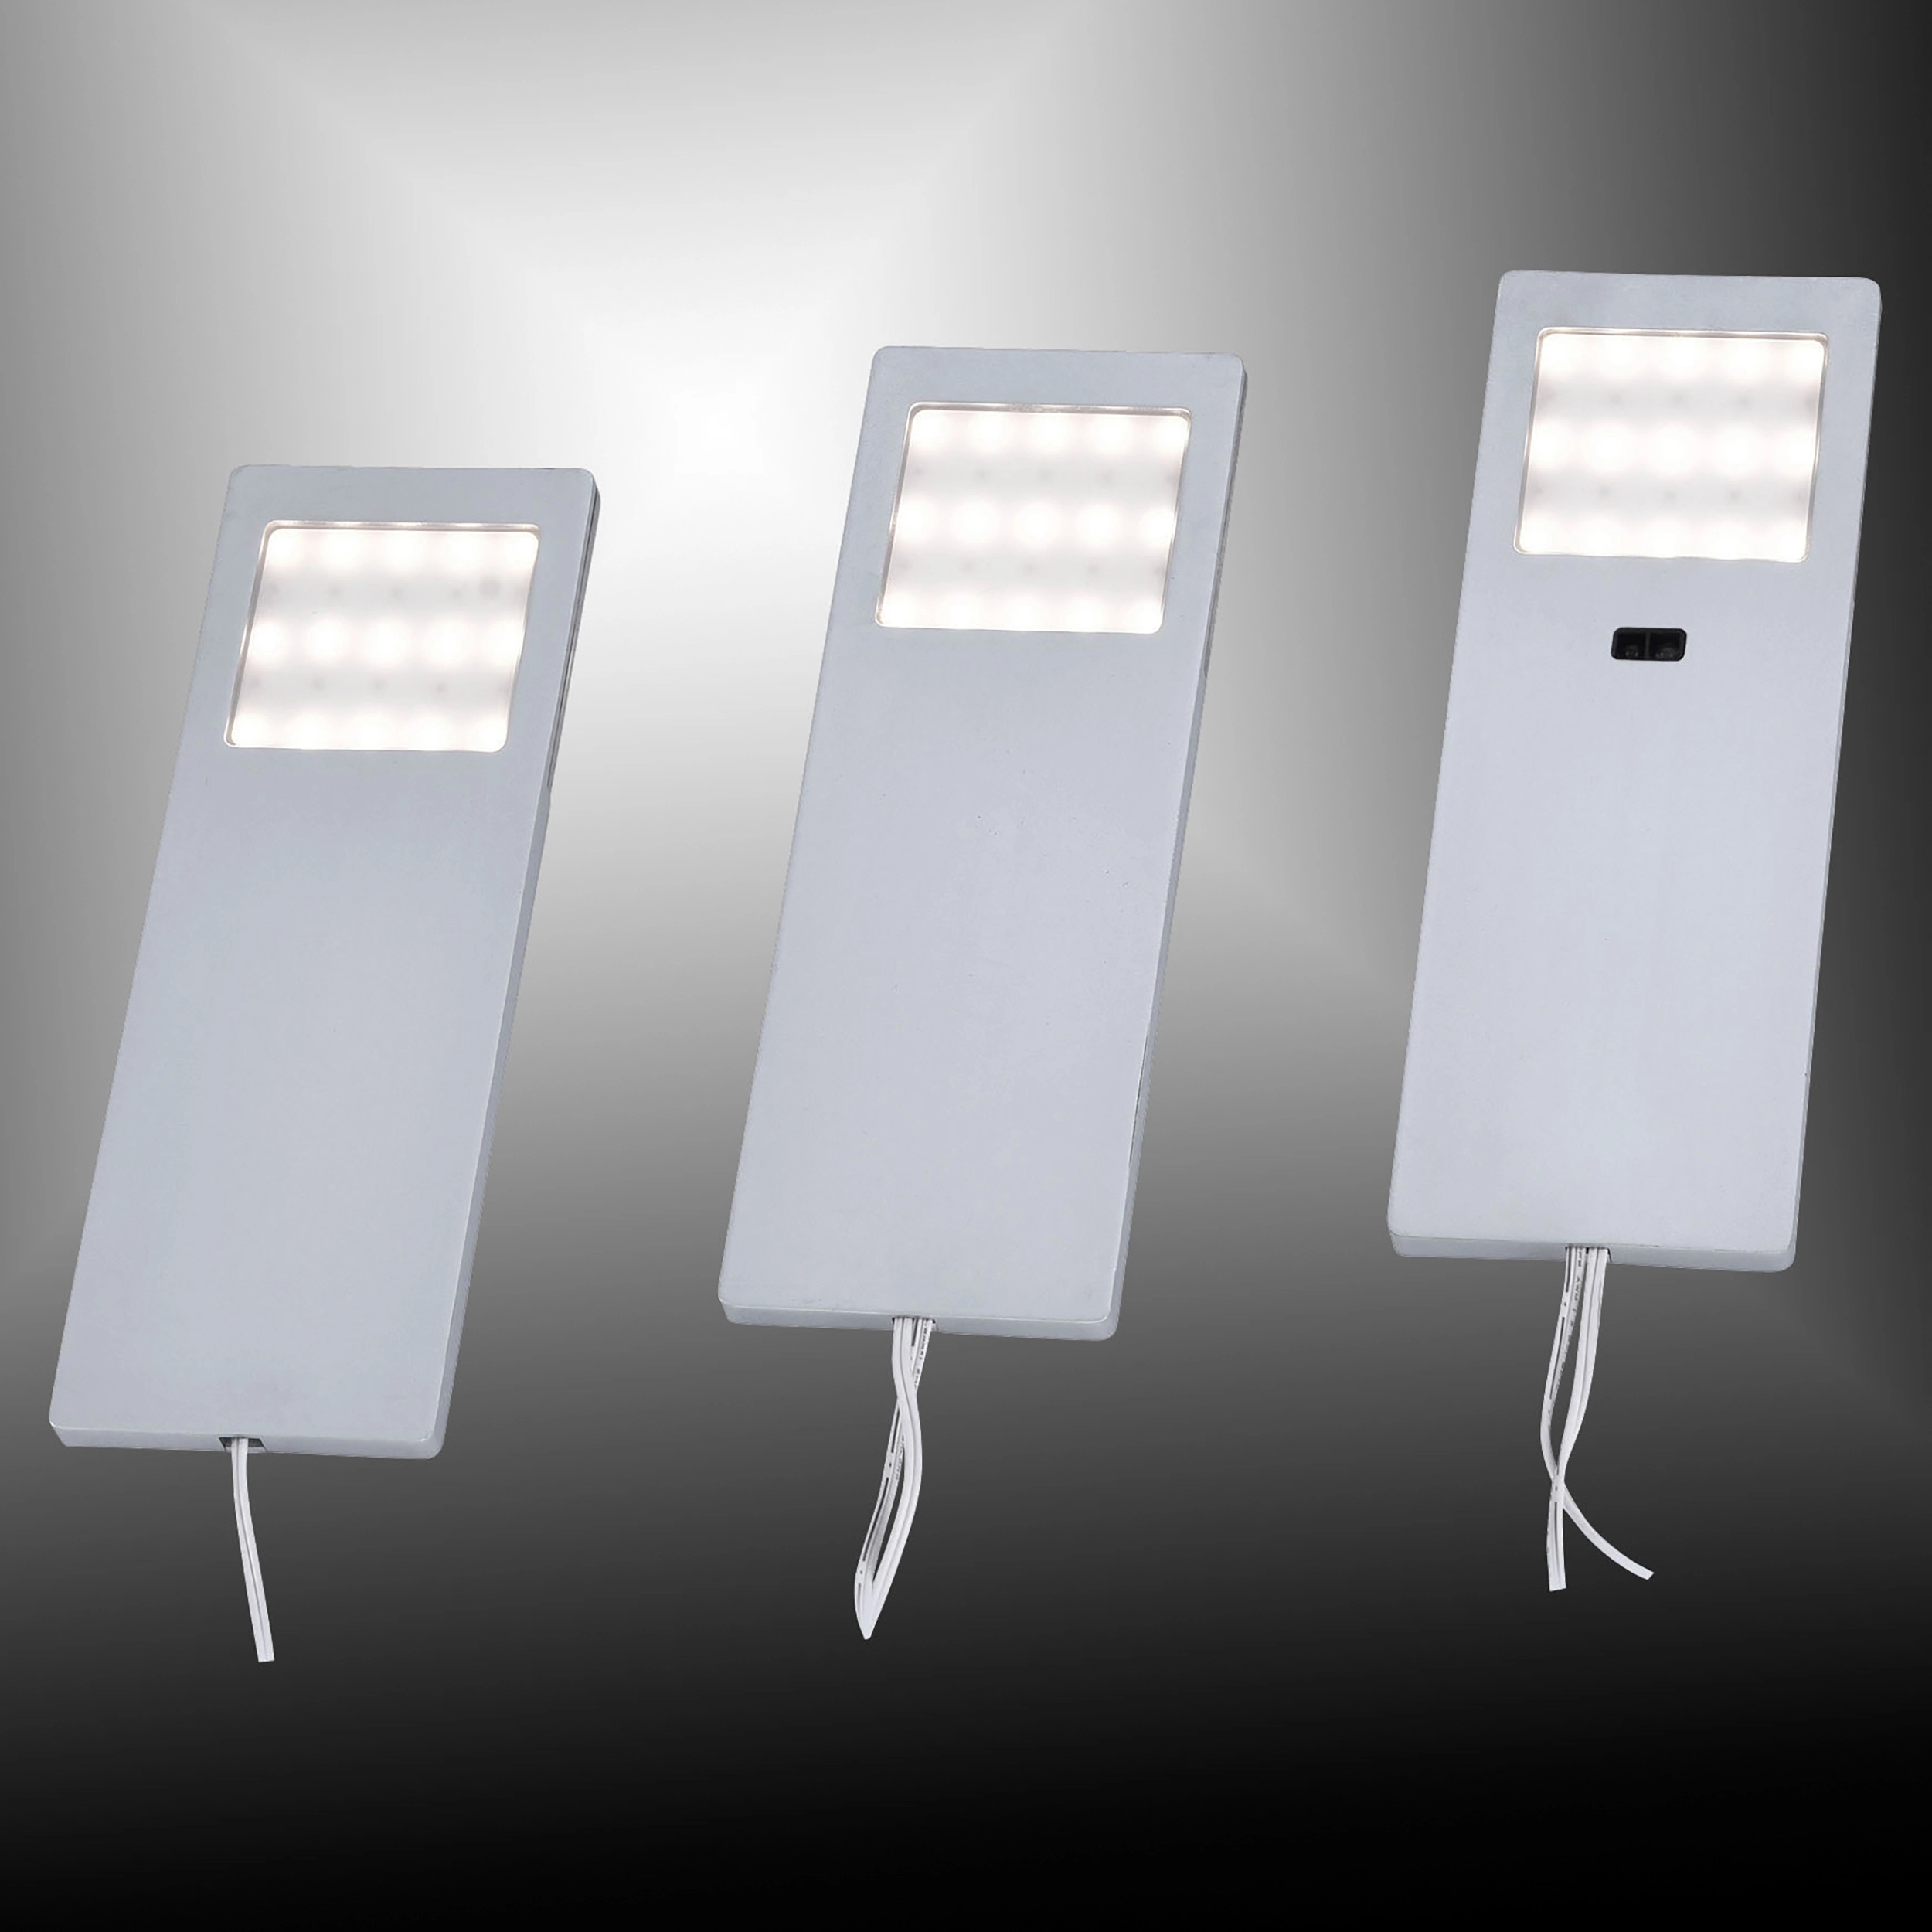 Paket] LED Unterbauleuchte, silber-grau, warmweiss, ohne Sensor, 2er SET